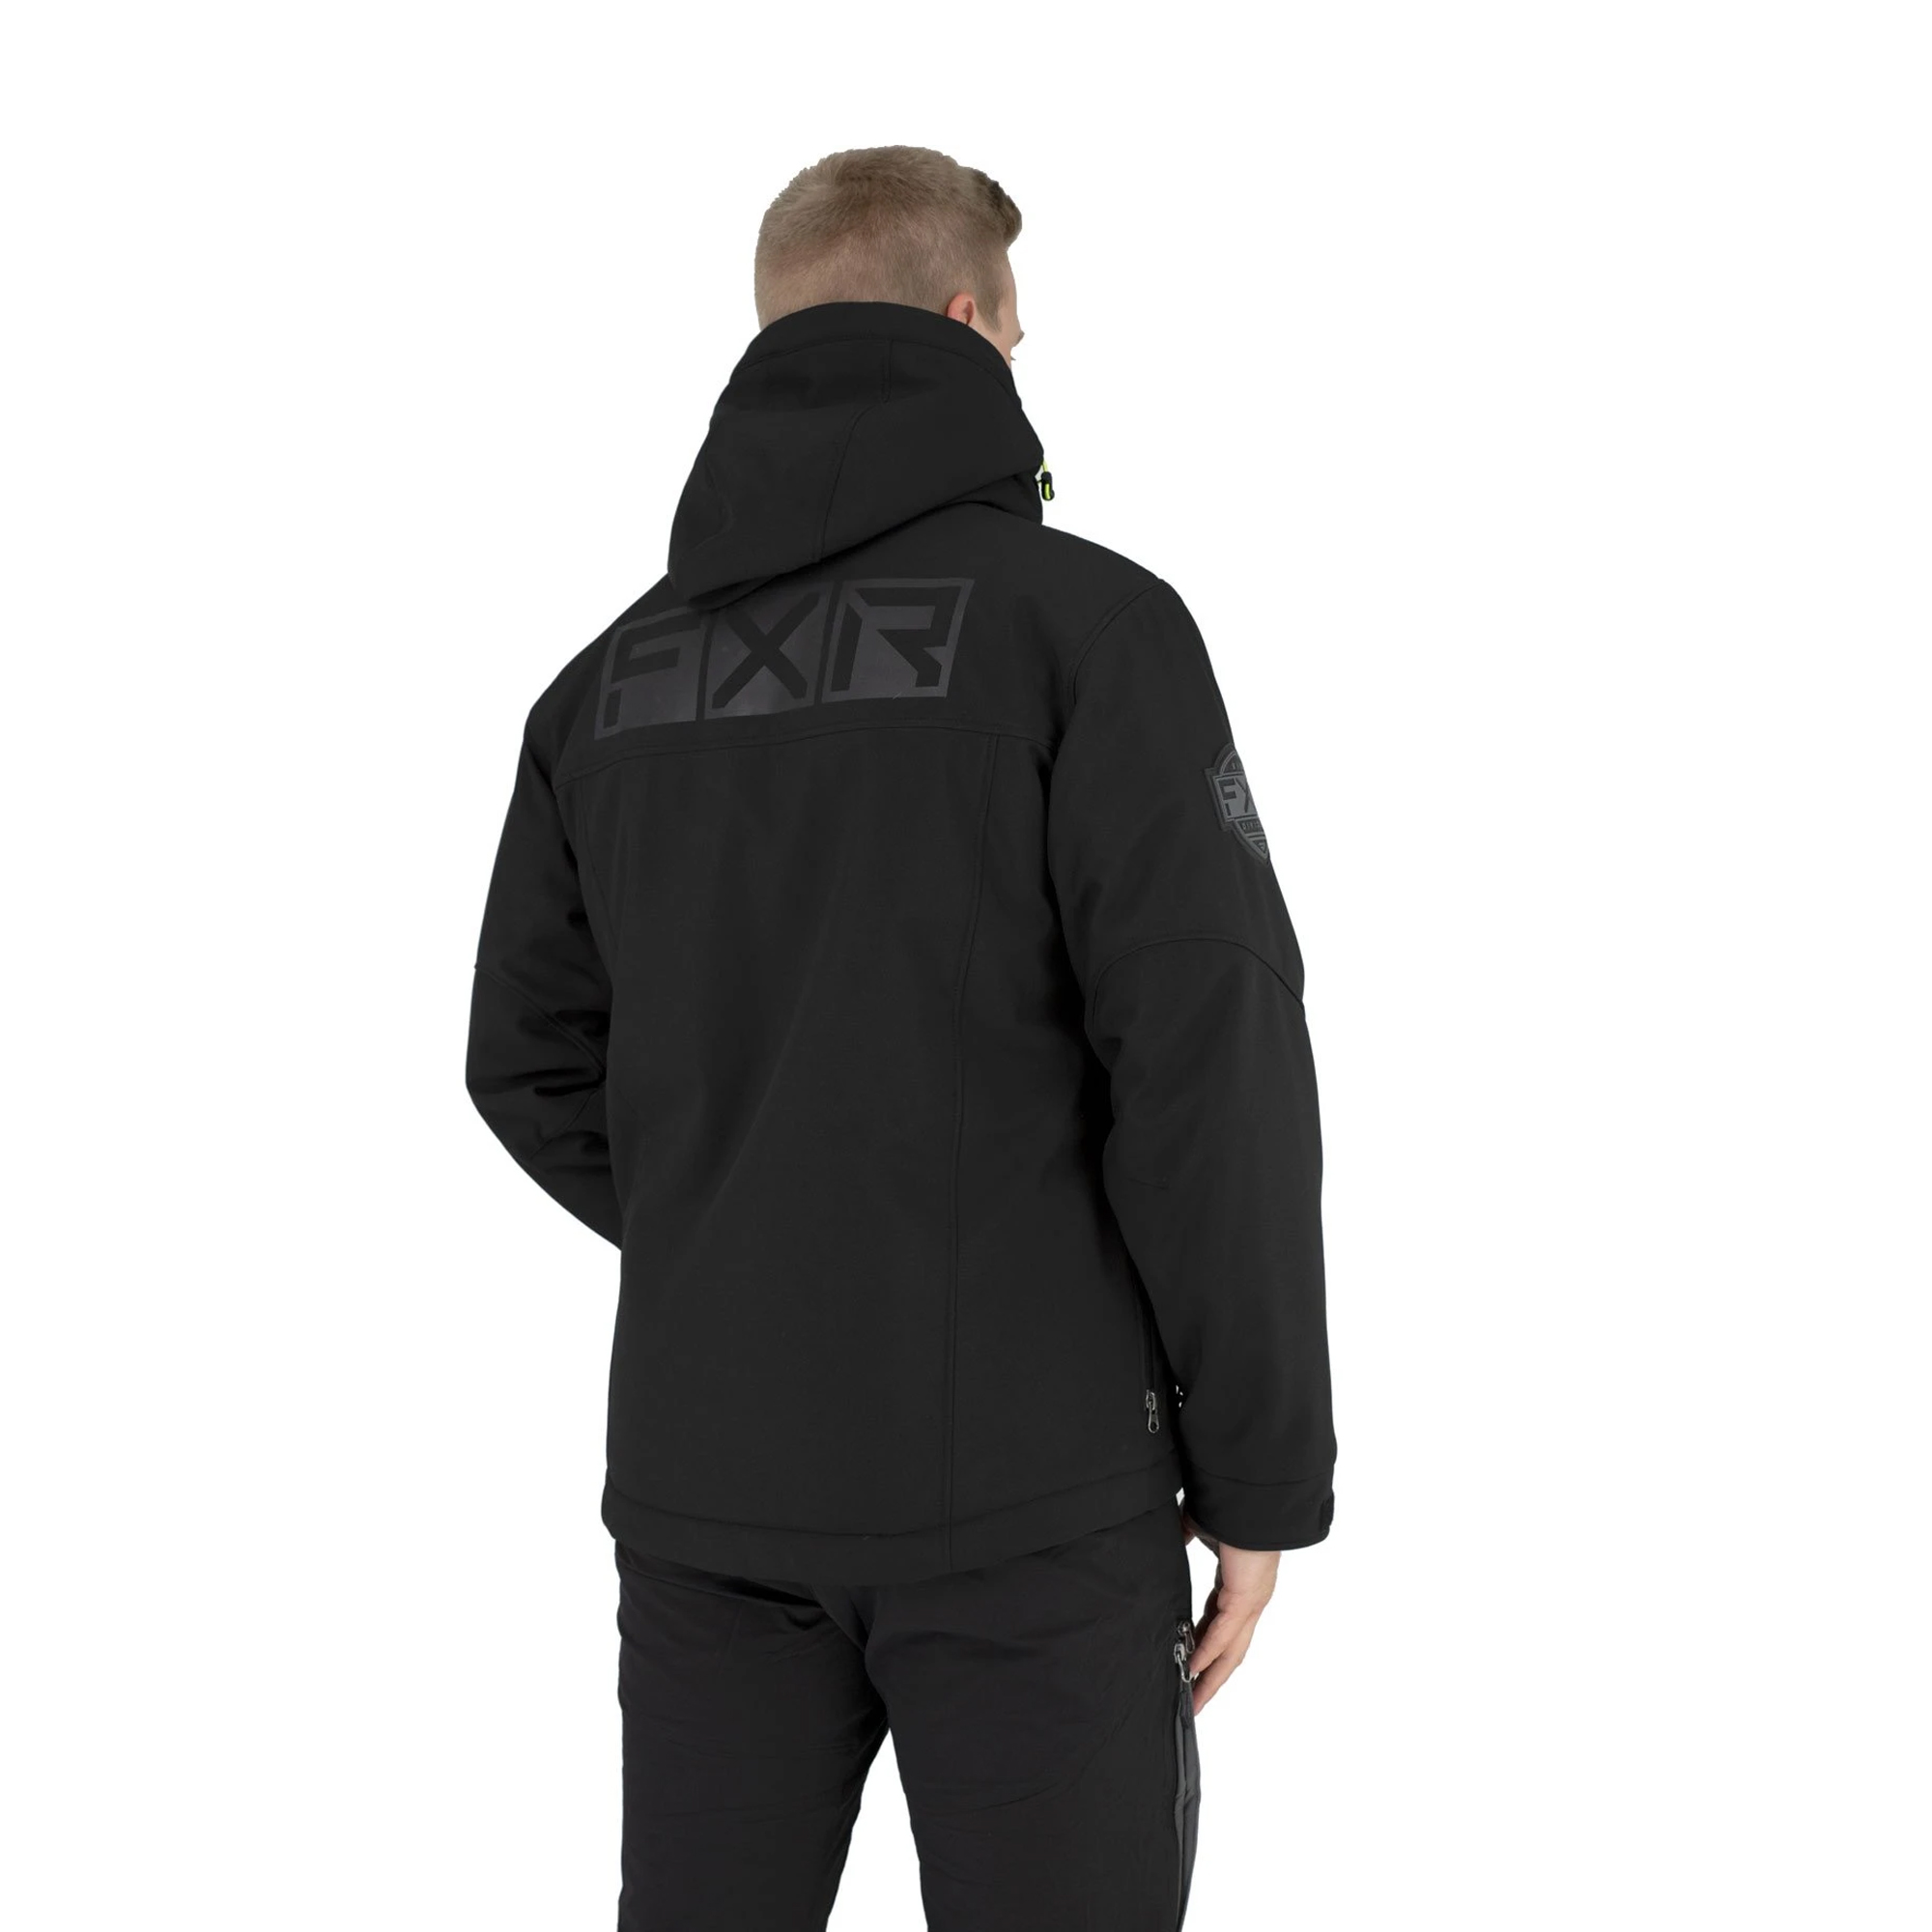 FXR  Black Hi-Vis Vertical Pro Insulated Softshell Jacket Warm Fleece Interior - XX-Large 210909-1065-19 - image 2 of 2